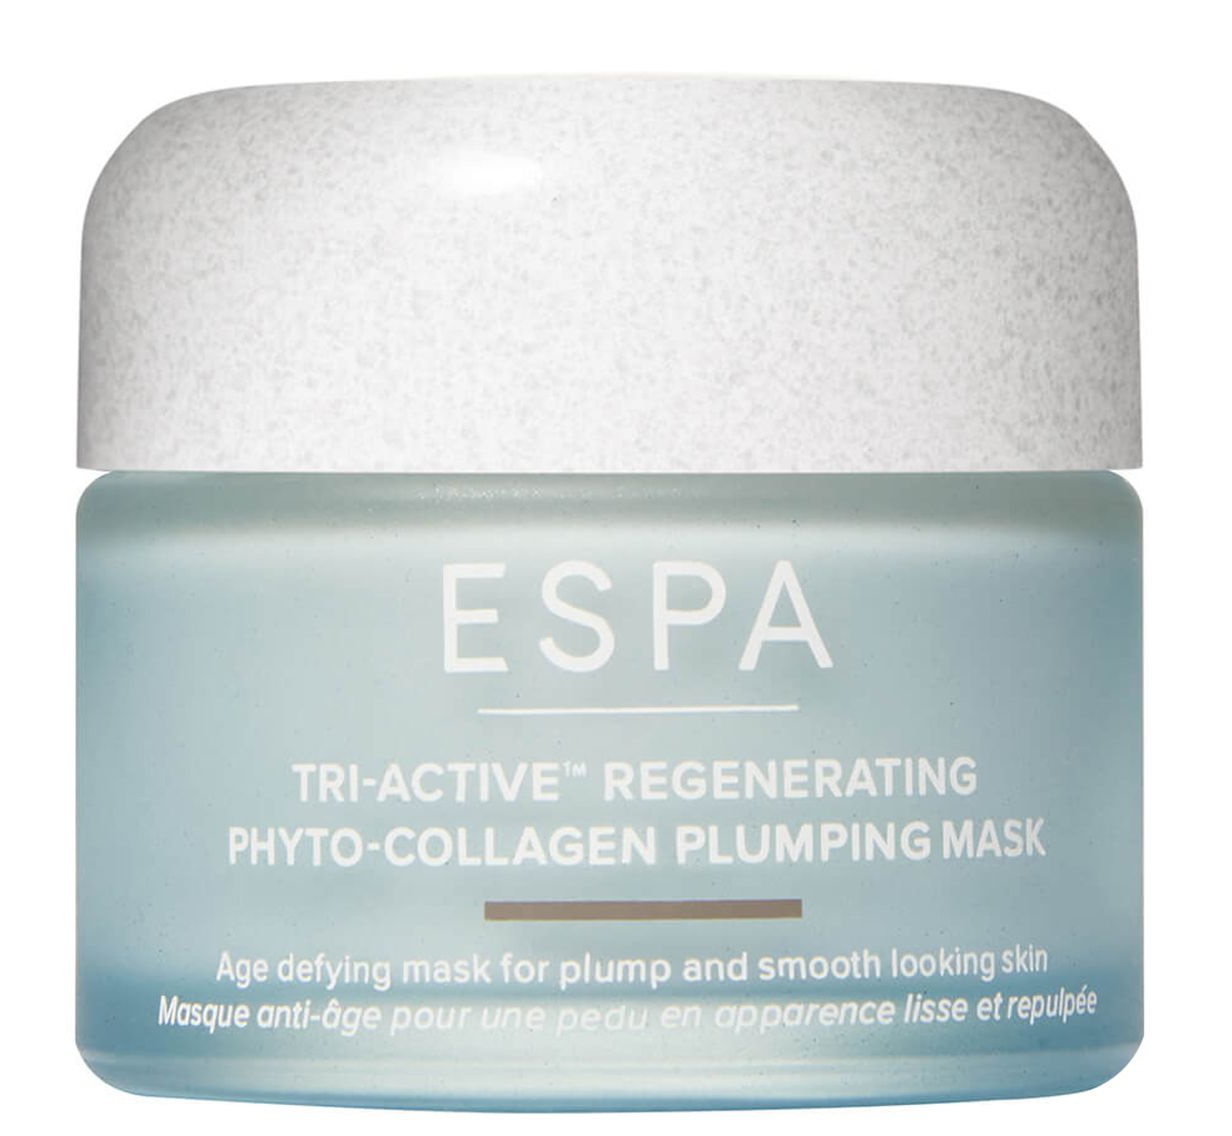 ESPA Tri-active™ Regenerating Phyto-collagen Plumping Mask